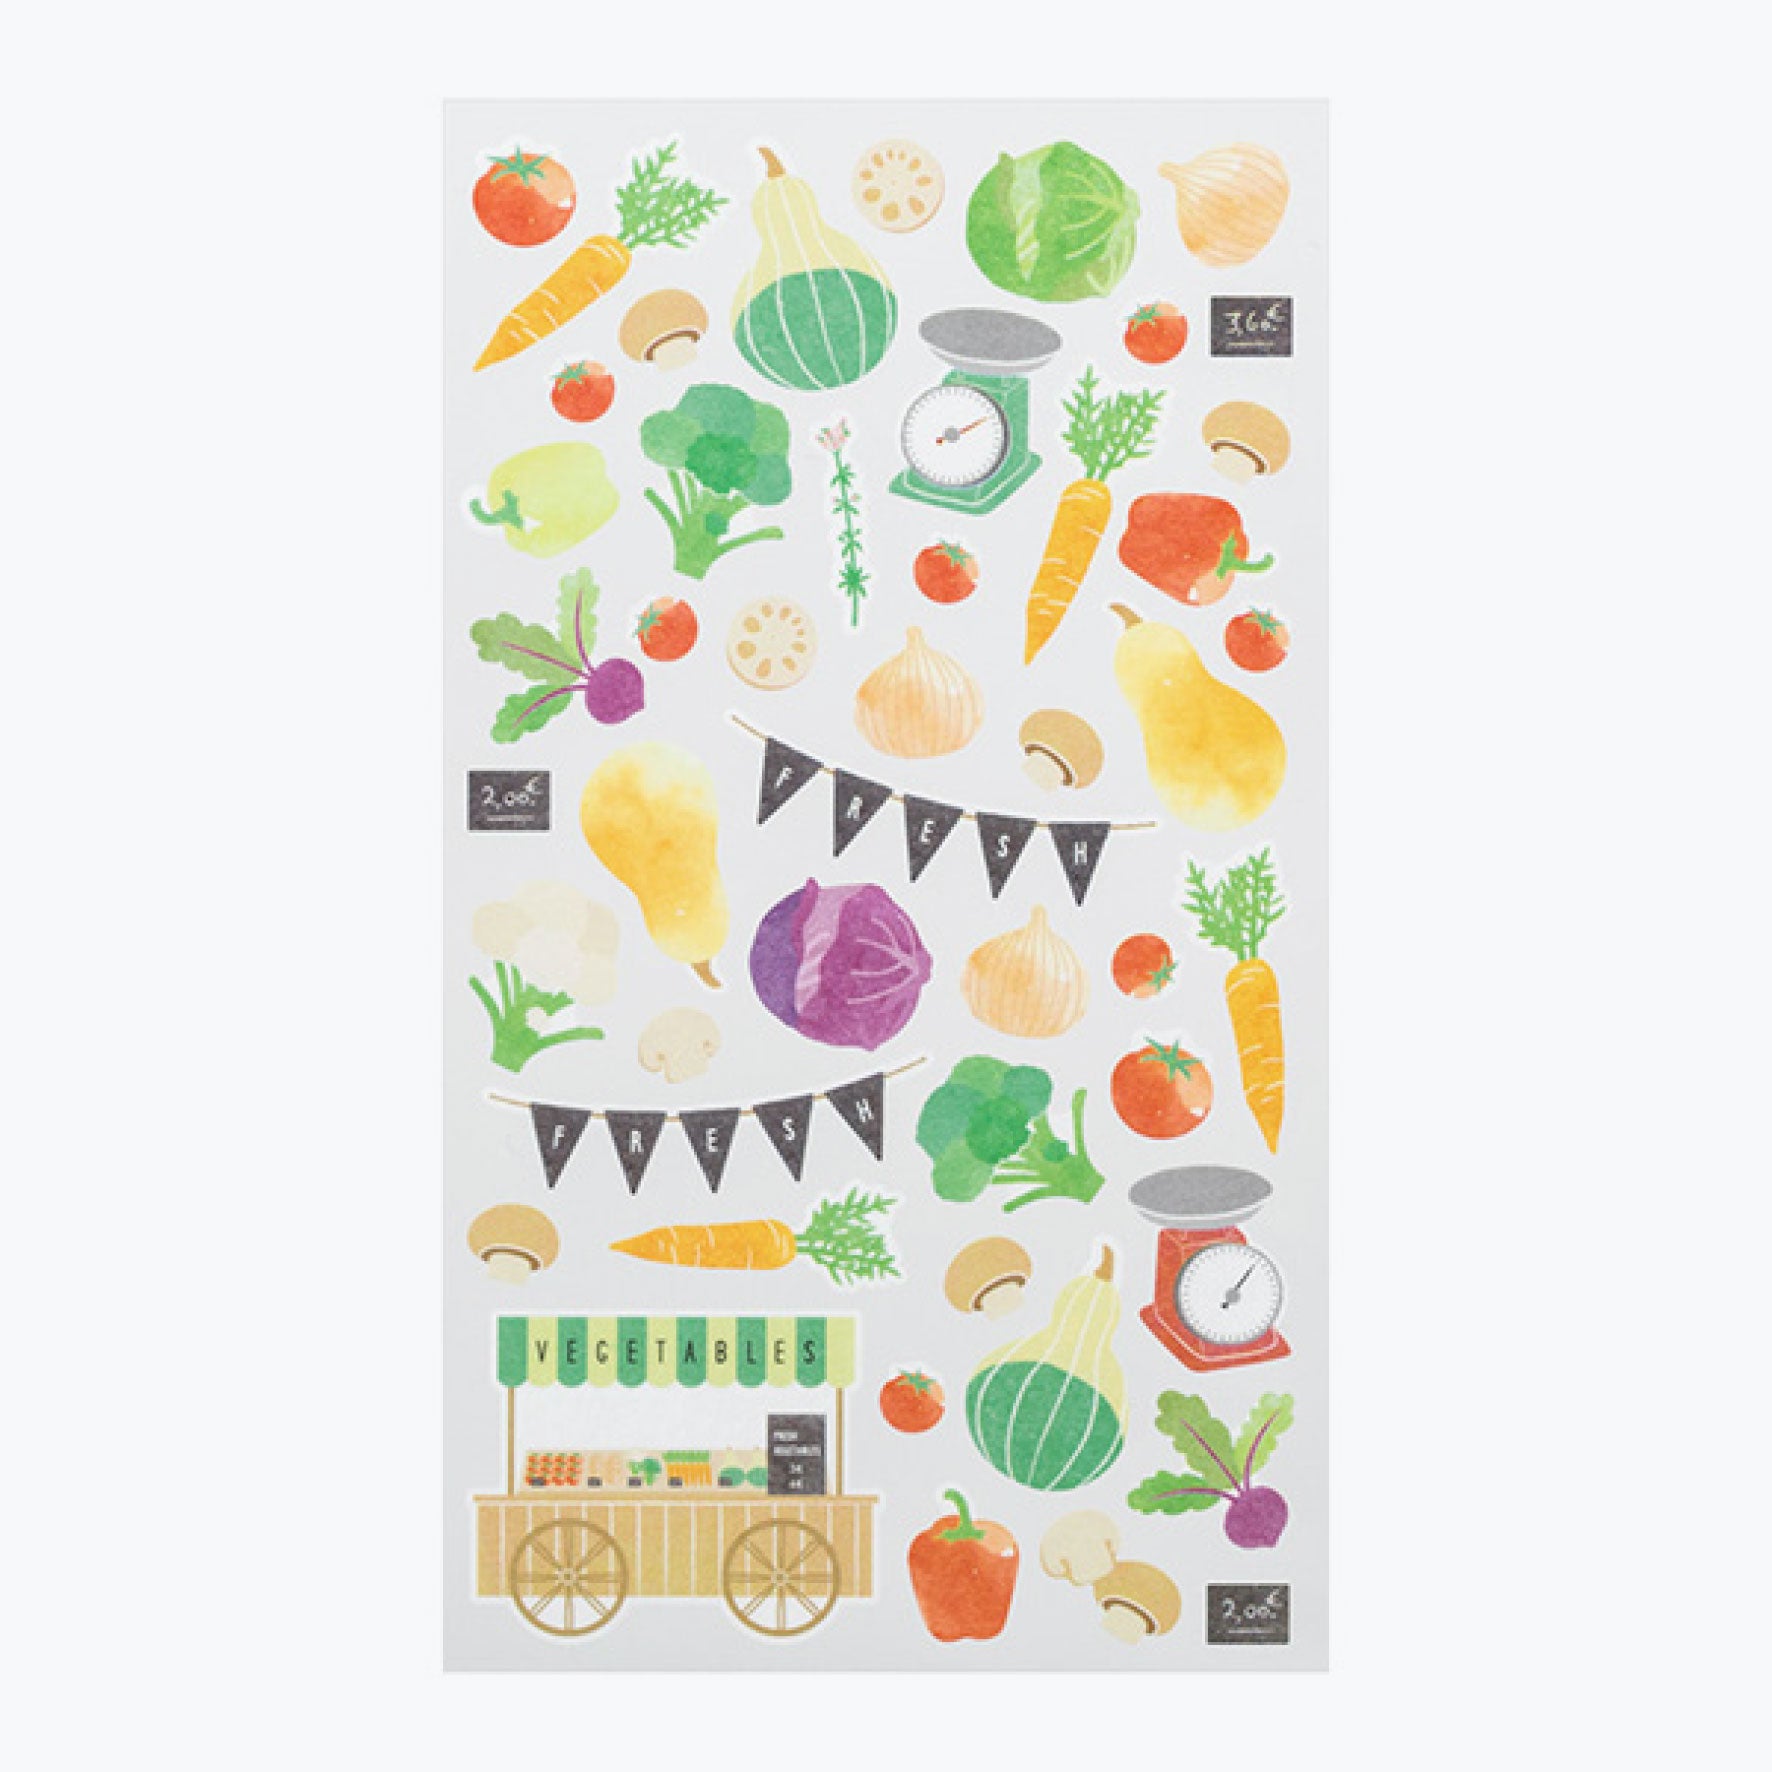 Midori - Sticker Seal - Sticker Marché - Vegetables